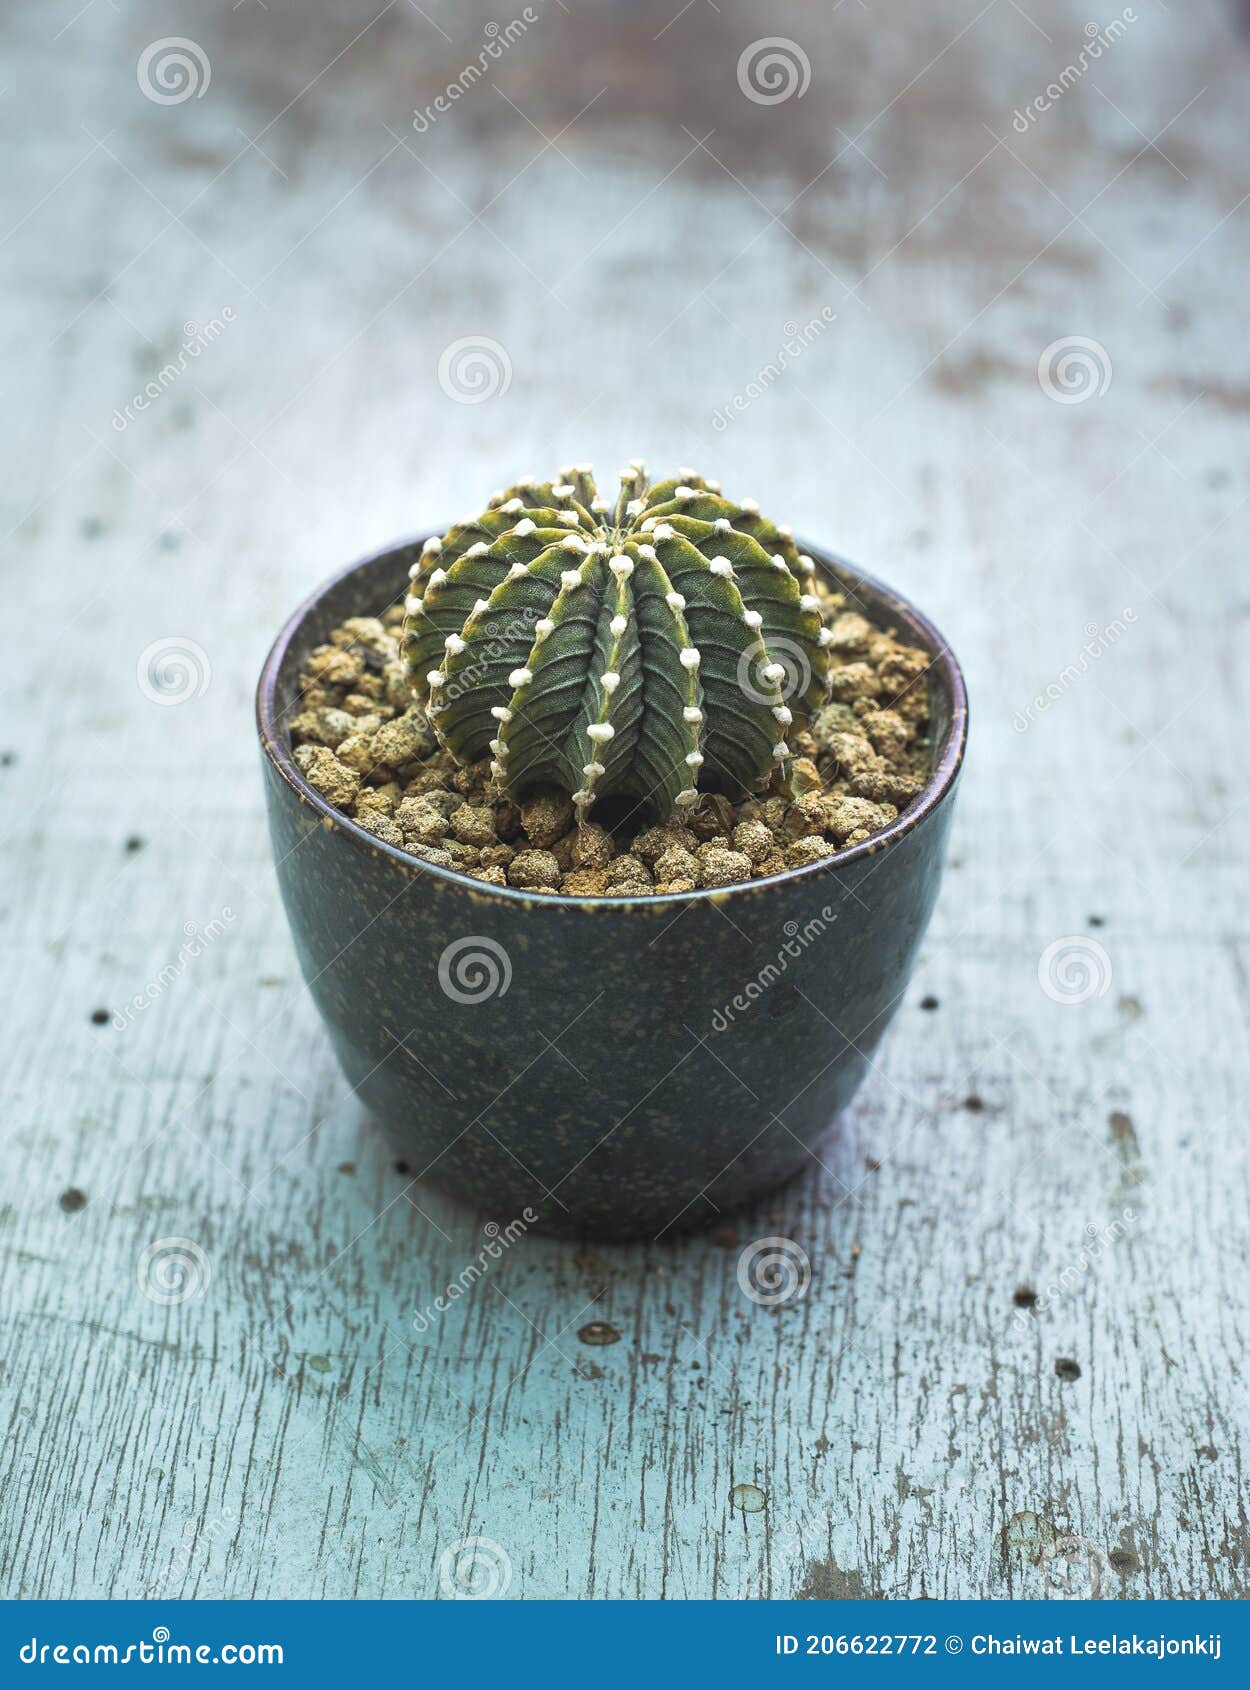 beautiful cactus named gymnocalycium mihanovichii lb2178 `agua dulce